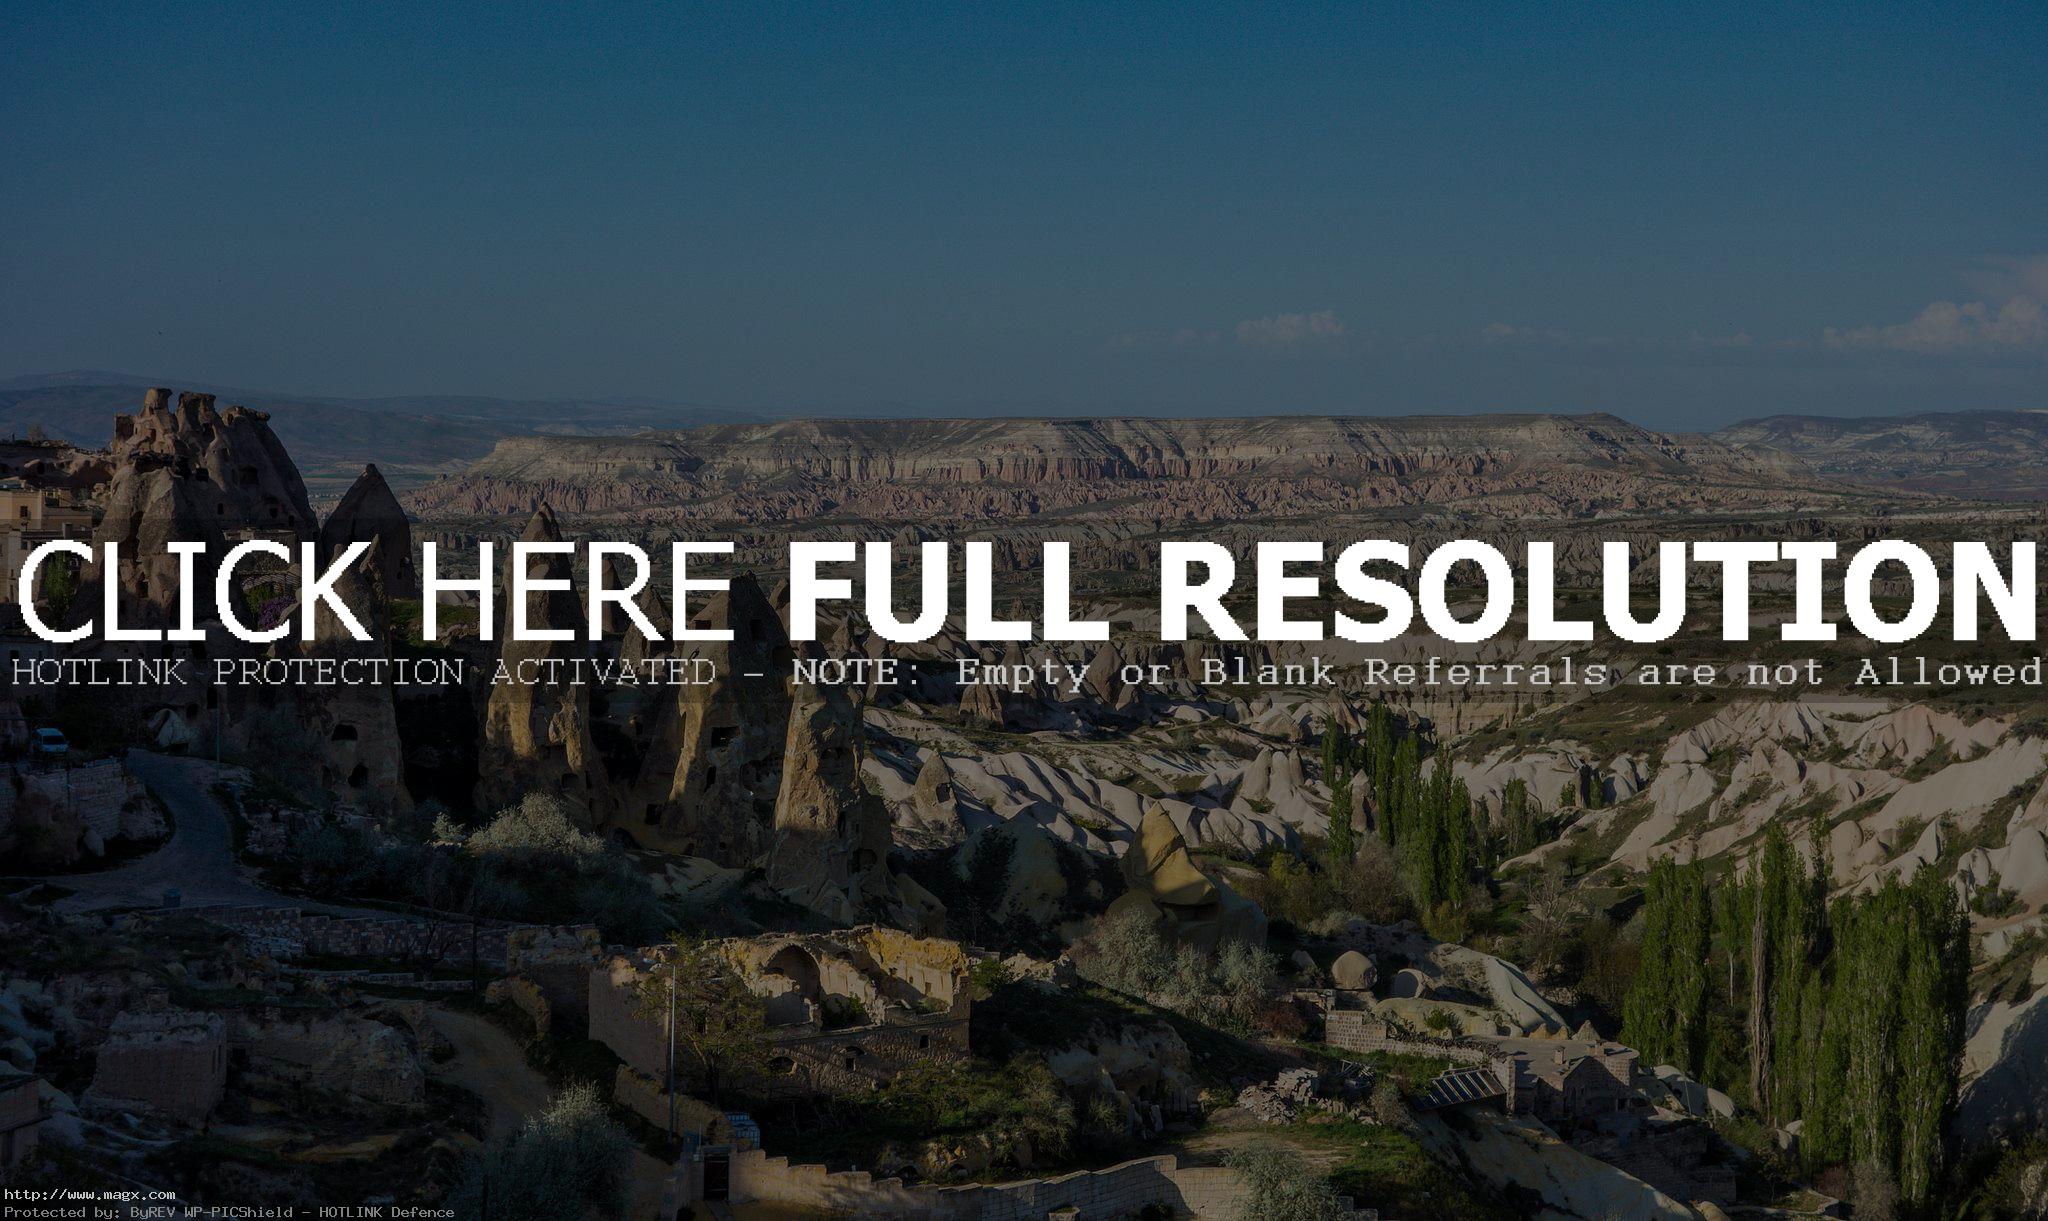 cappadocia Rock Sites of Cappadocia and Goreme National Park in Turkey